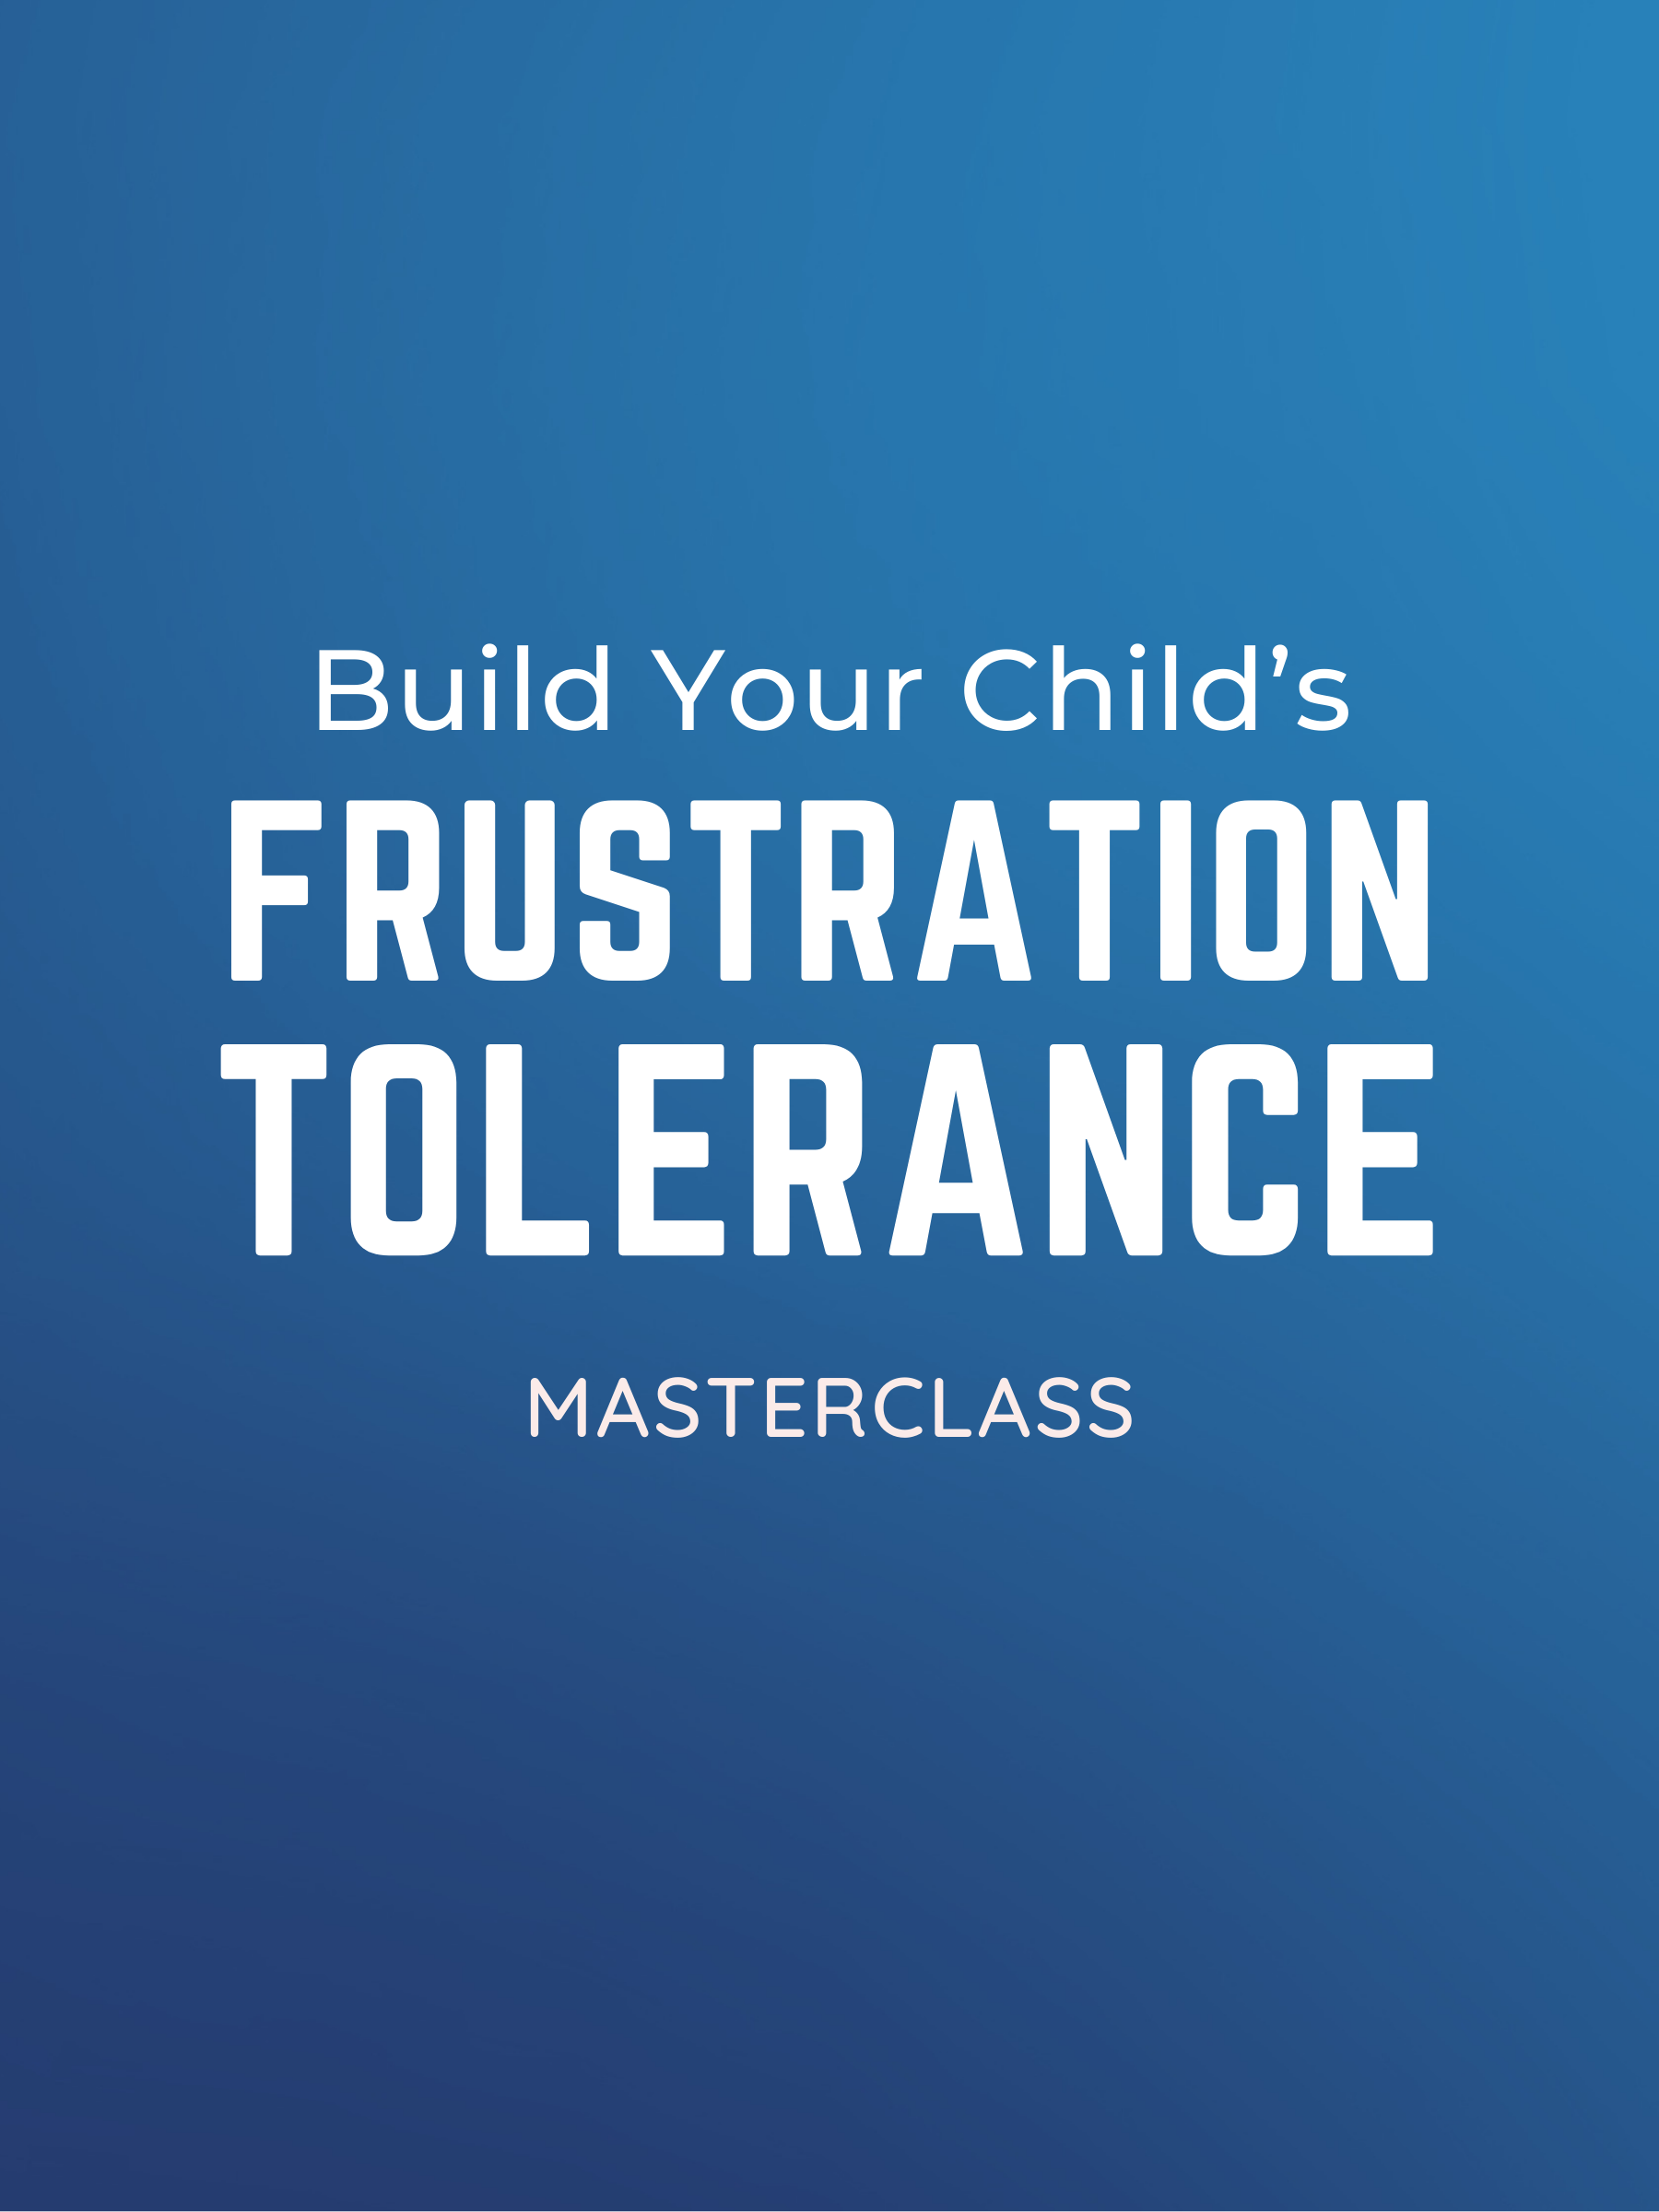 Masterclass: Build Your Child's Frustration Tolerance